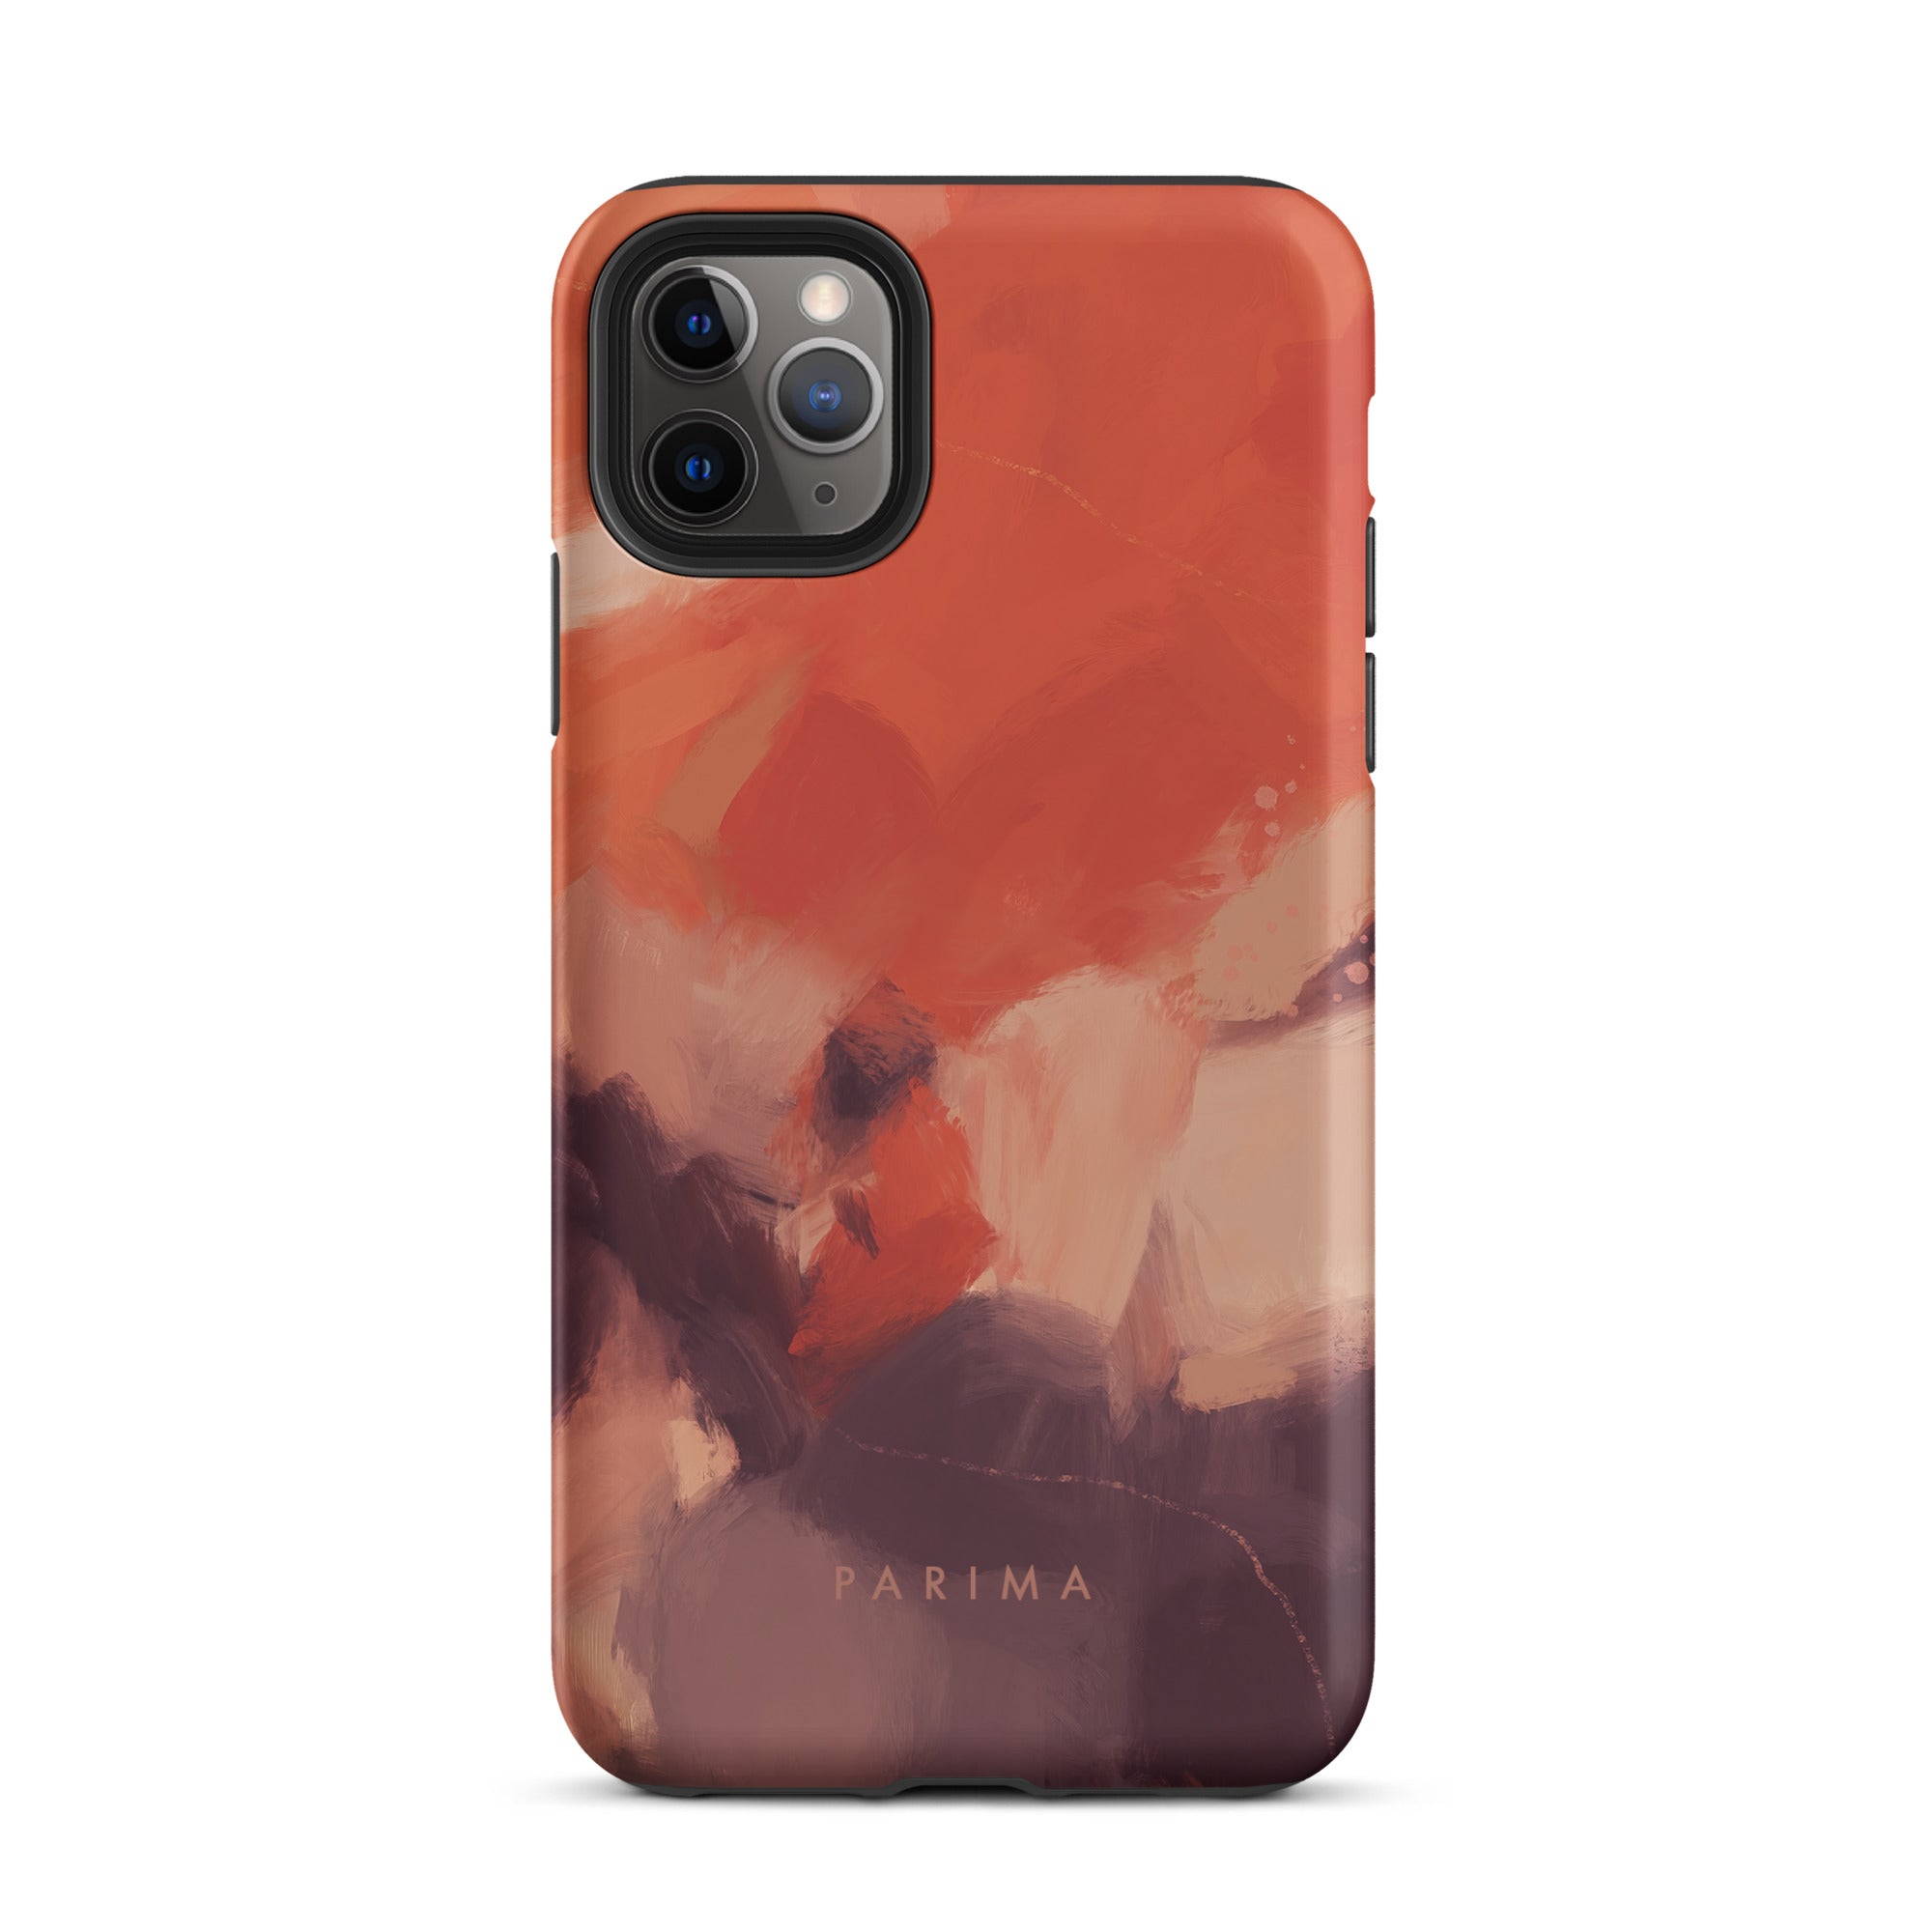 Autumn, orange and purple abstract art - iPhone 11 Pro Max tough case by Parima Studio